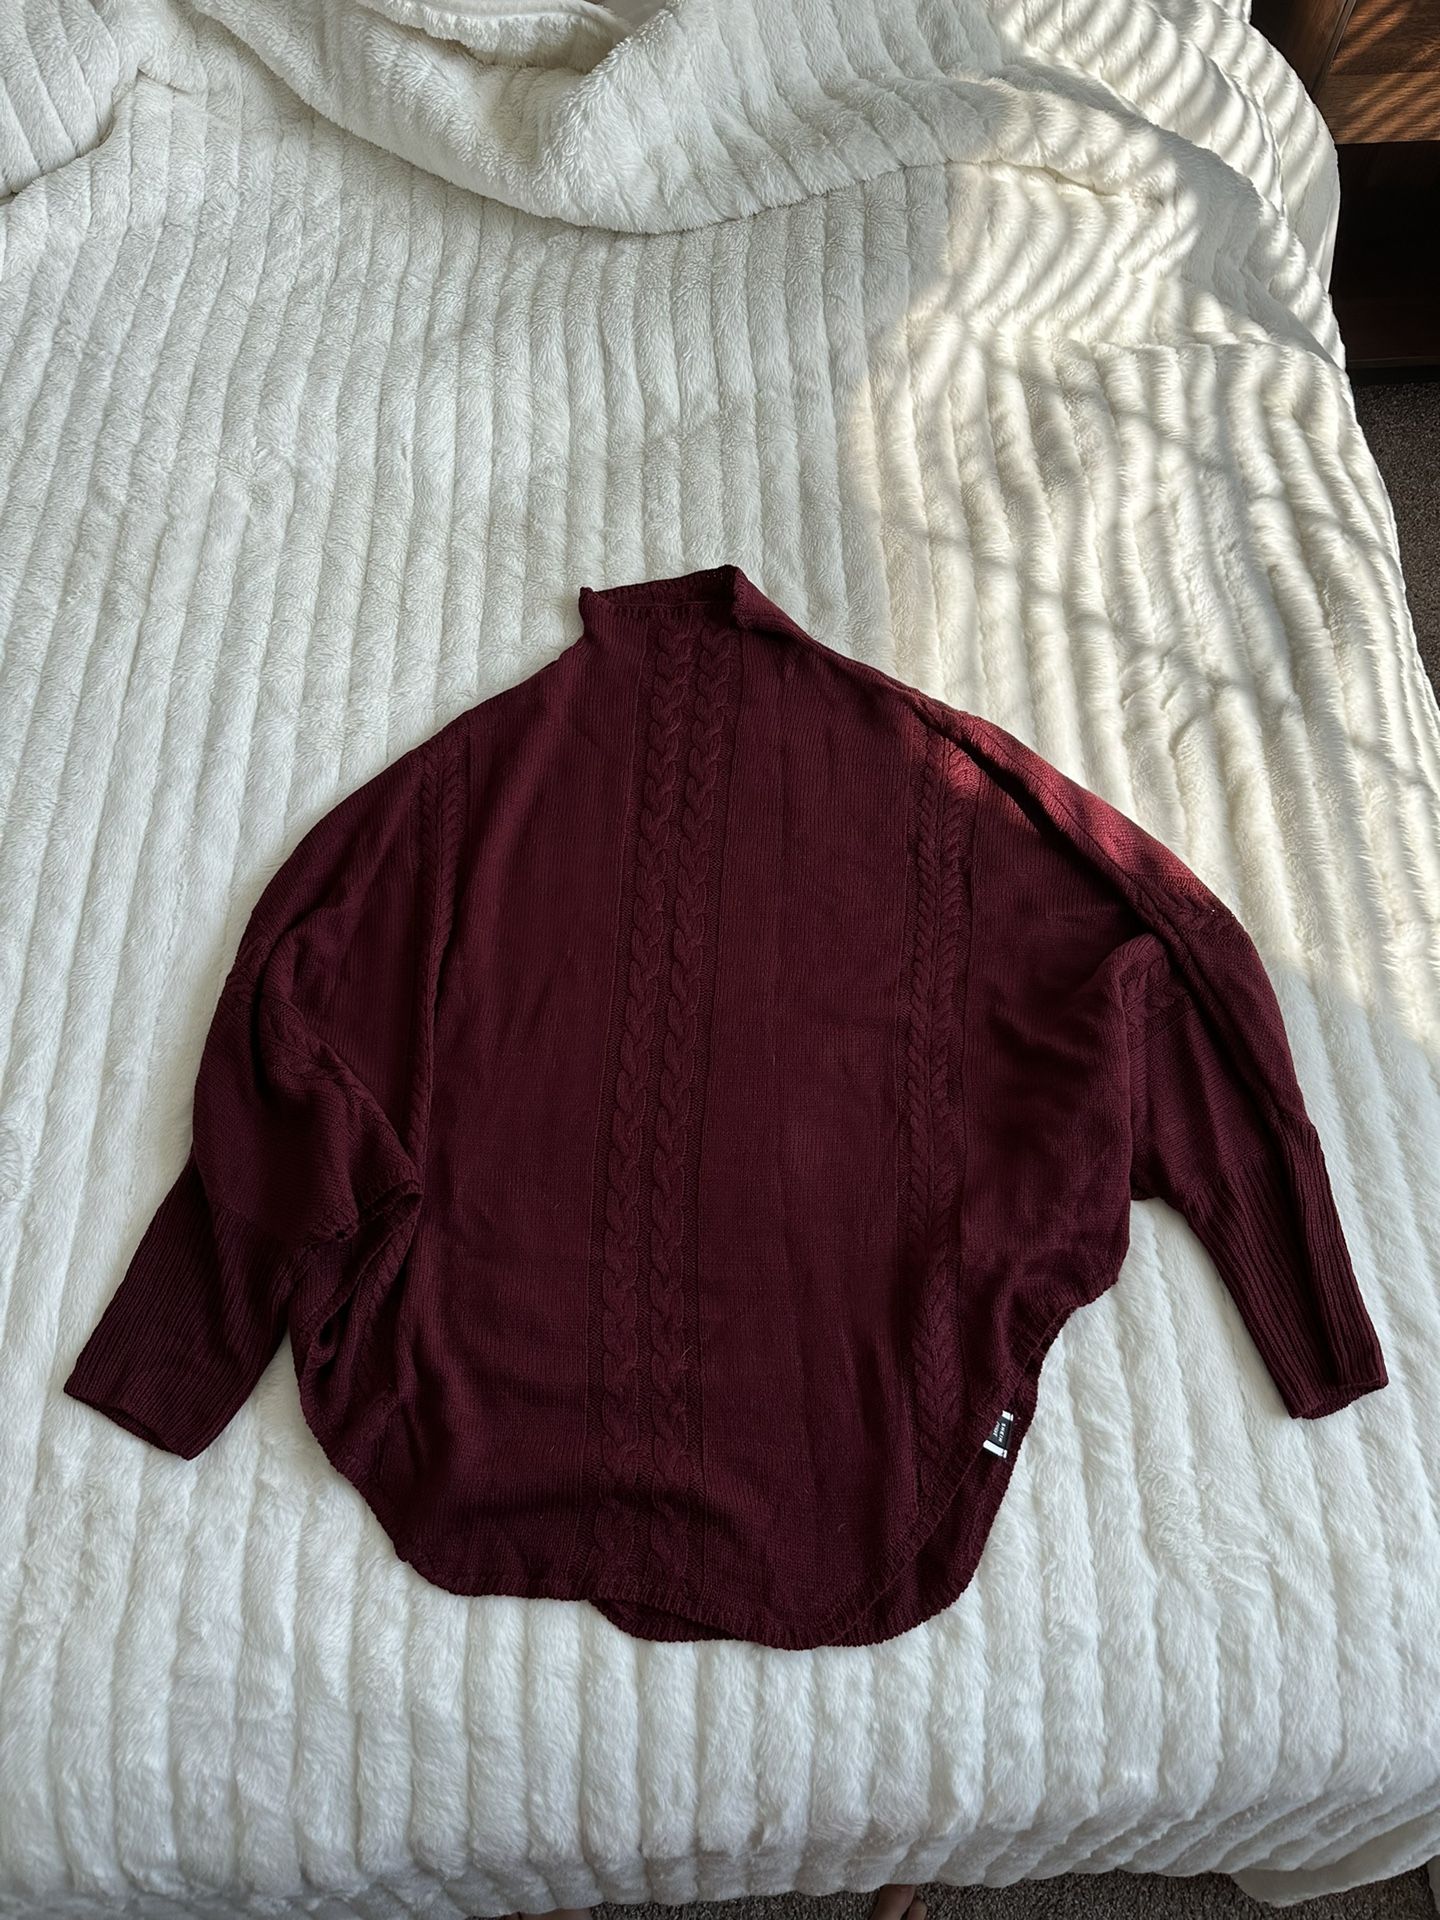 Maroon Sweater Poncho